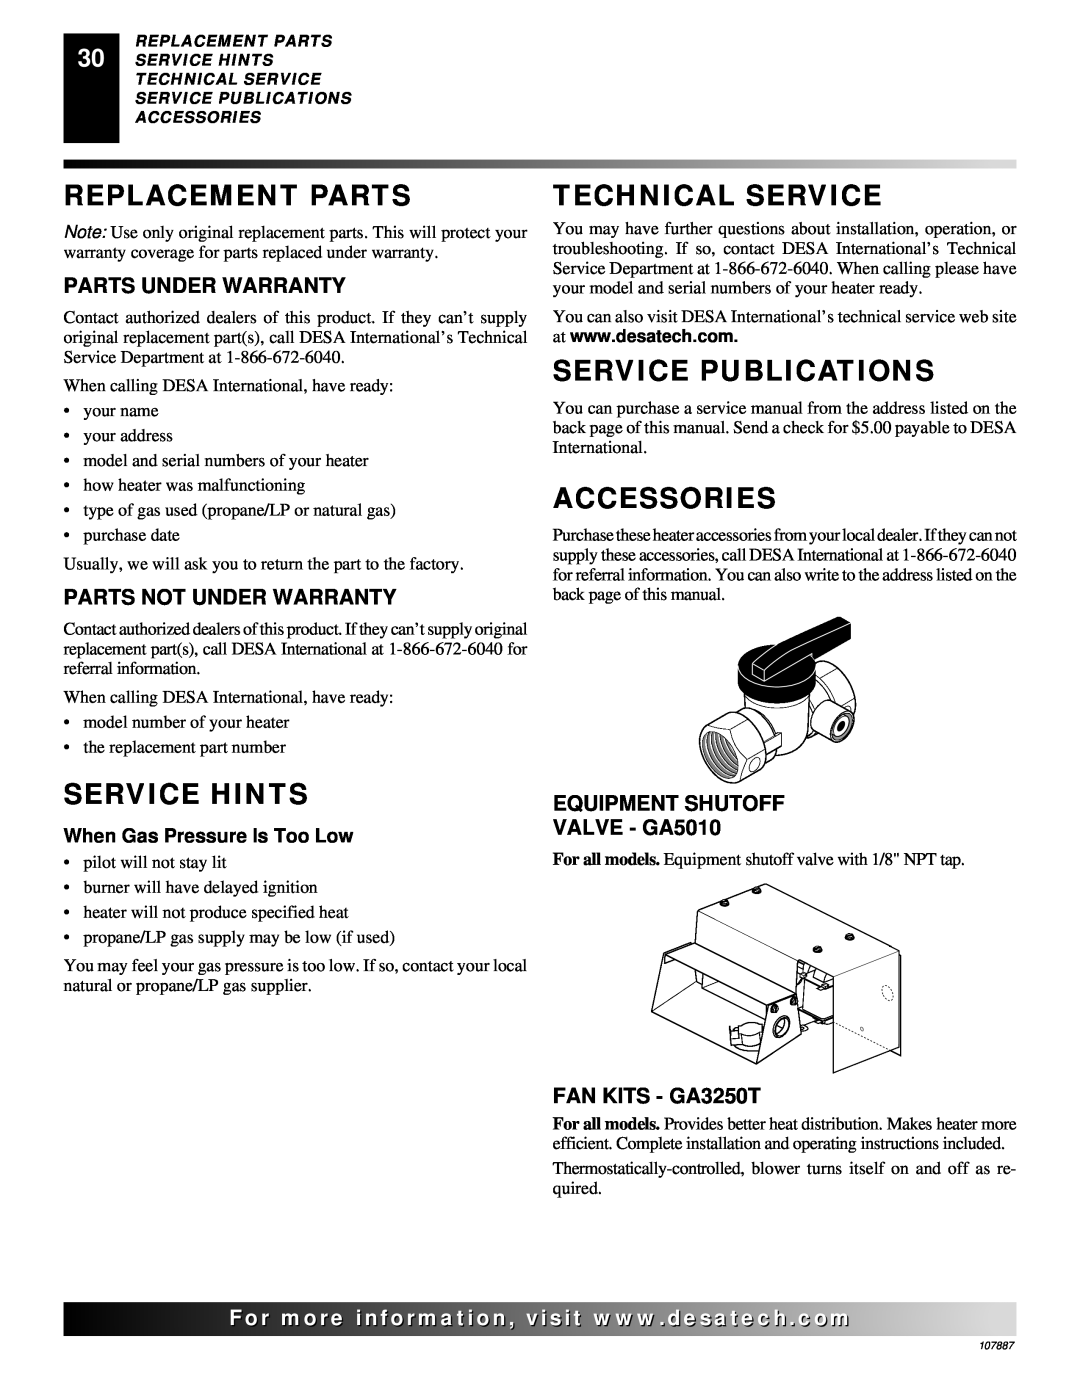 Vanguard Heating VN18T, VP26T, VP16T Replacement Parts, Service Hints, Technical Service, Service Publications, Accessories 